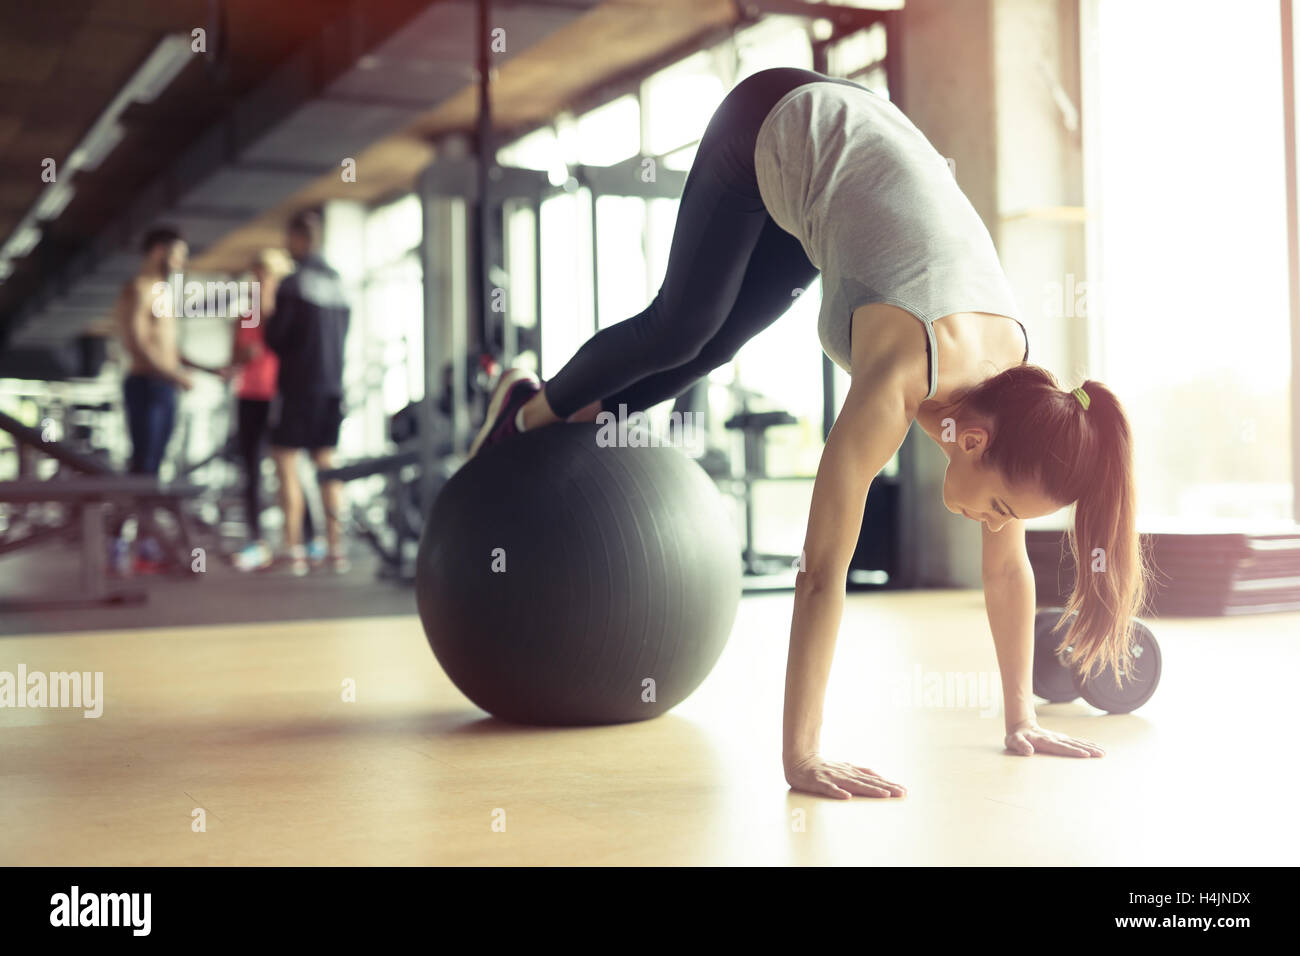 Sportliche Frau mit Ball im Fitness-Studio trainieren Stockfoto